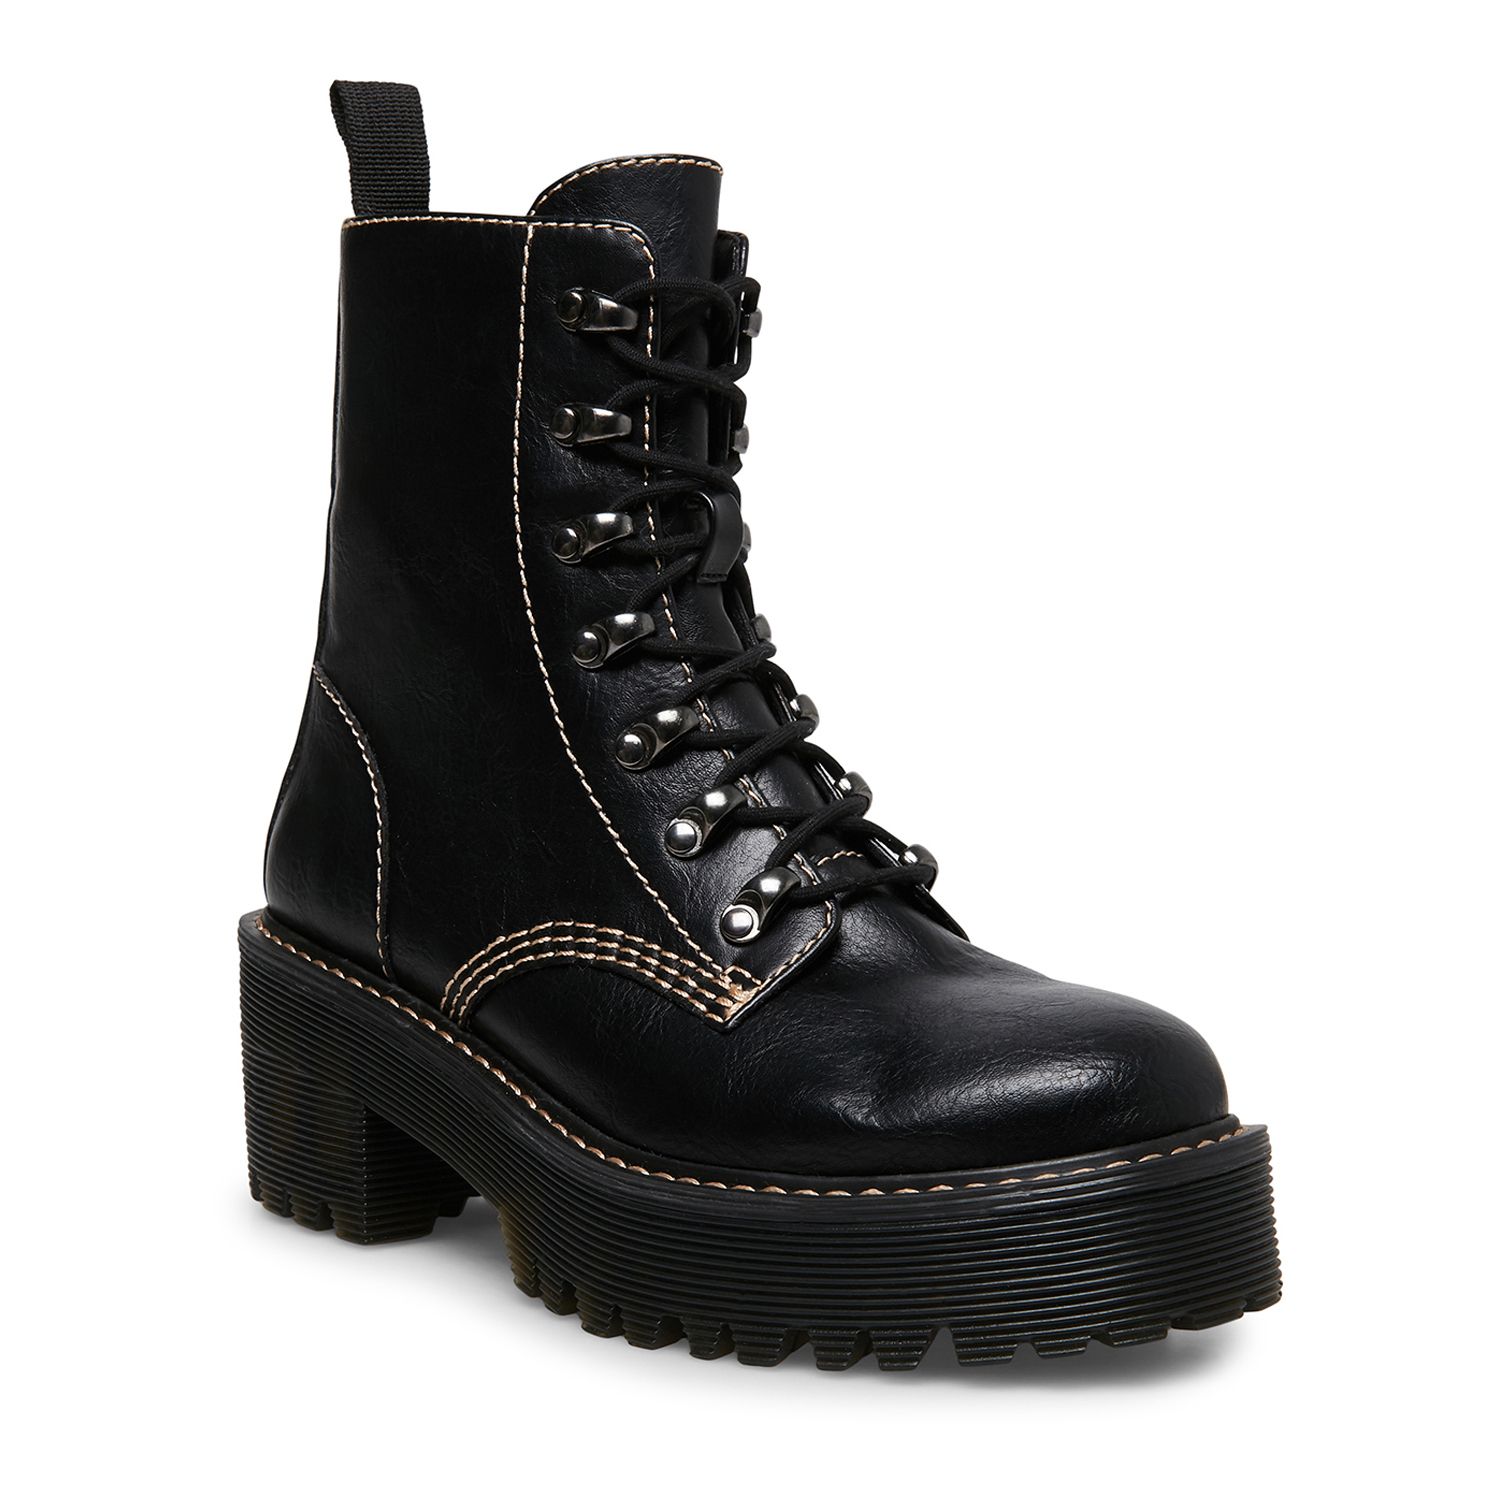 madden girl combat boots black